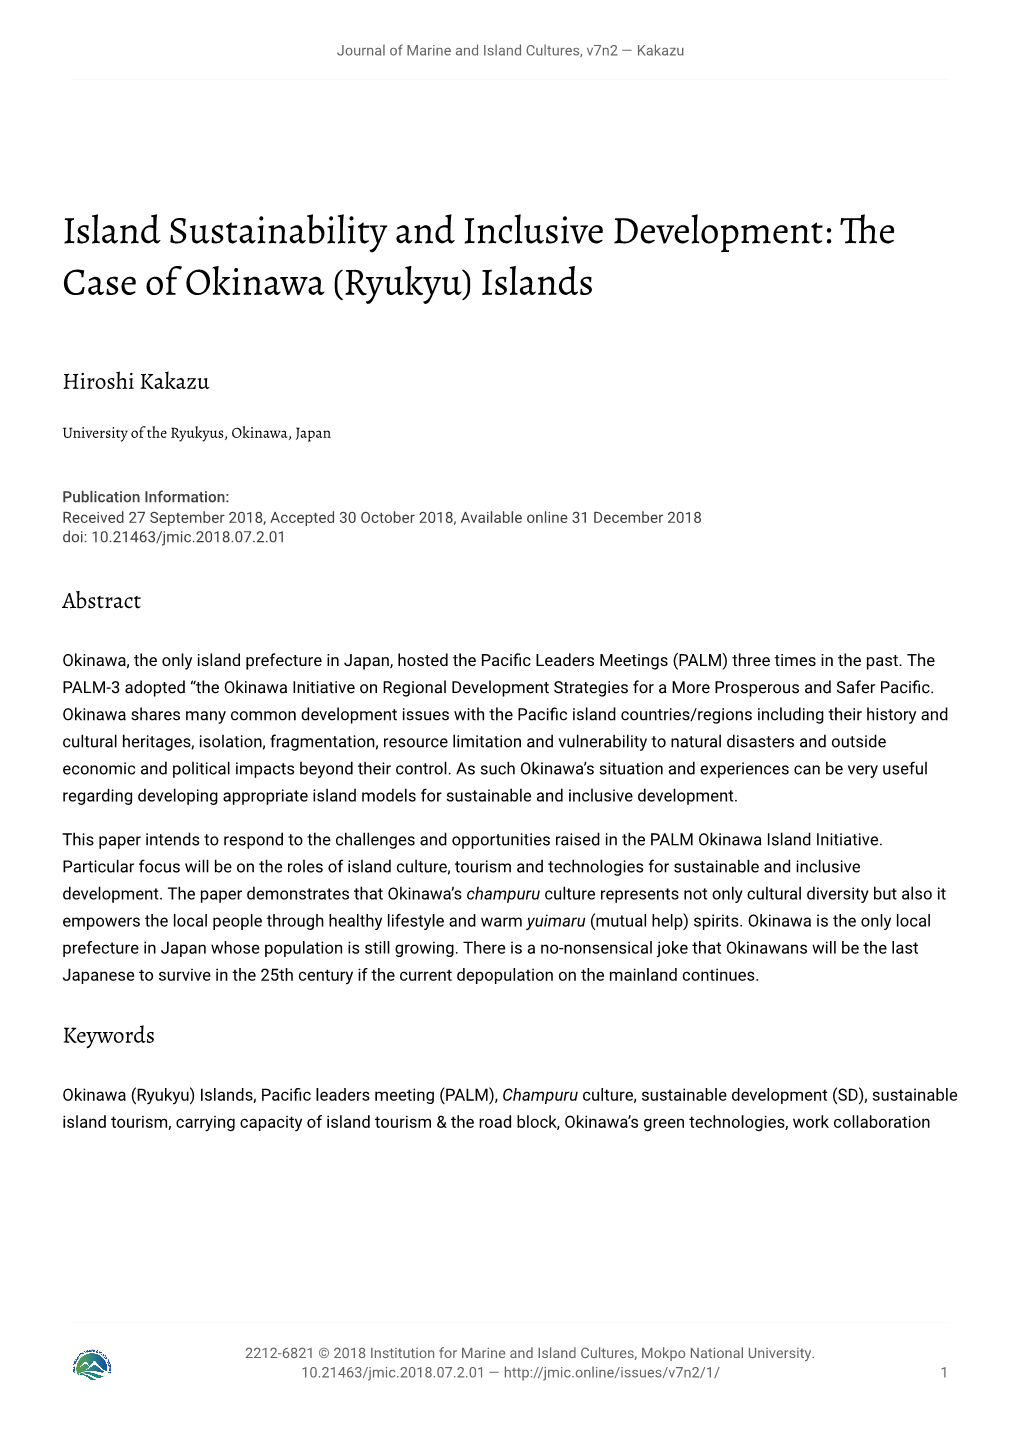 Island Sustainability and Inclusive Development: the Case of Okinawa (Ryukyu)